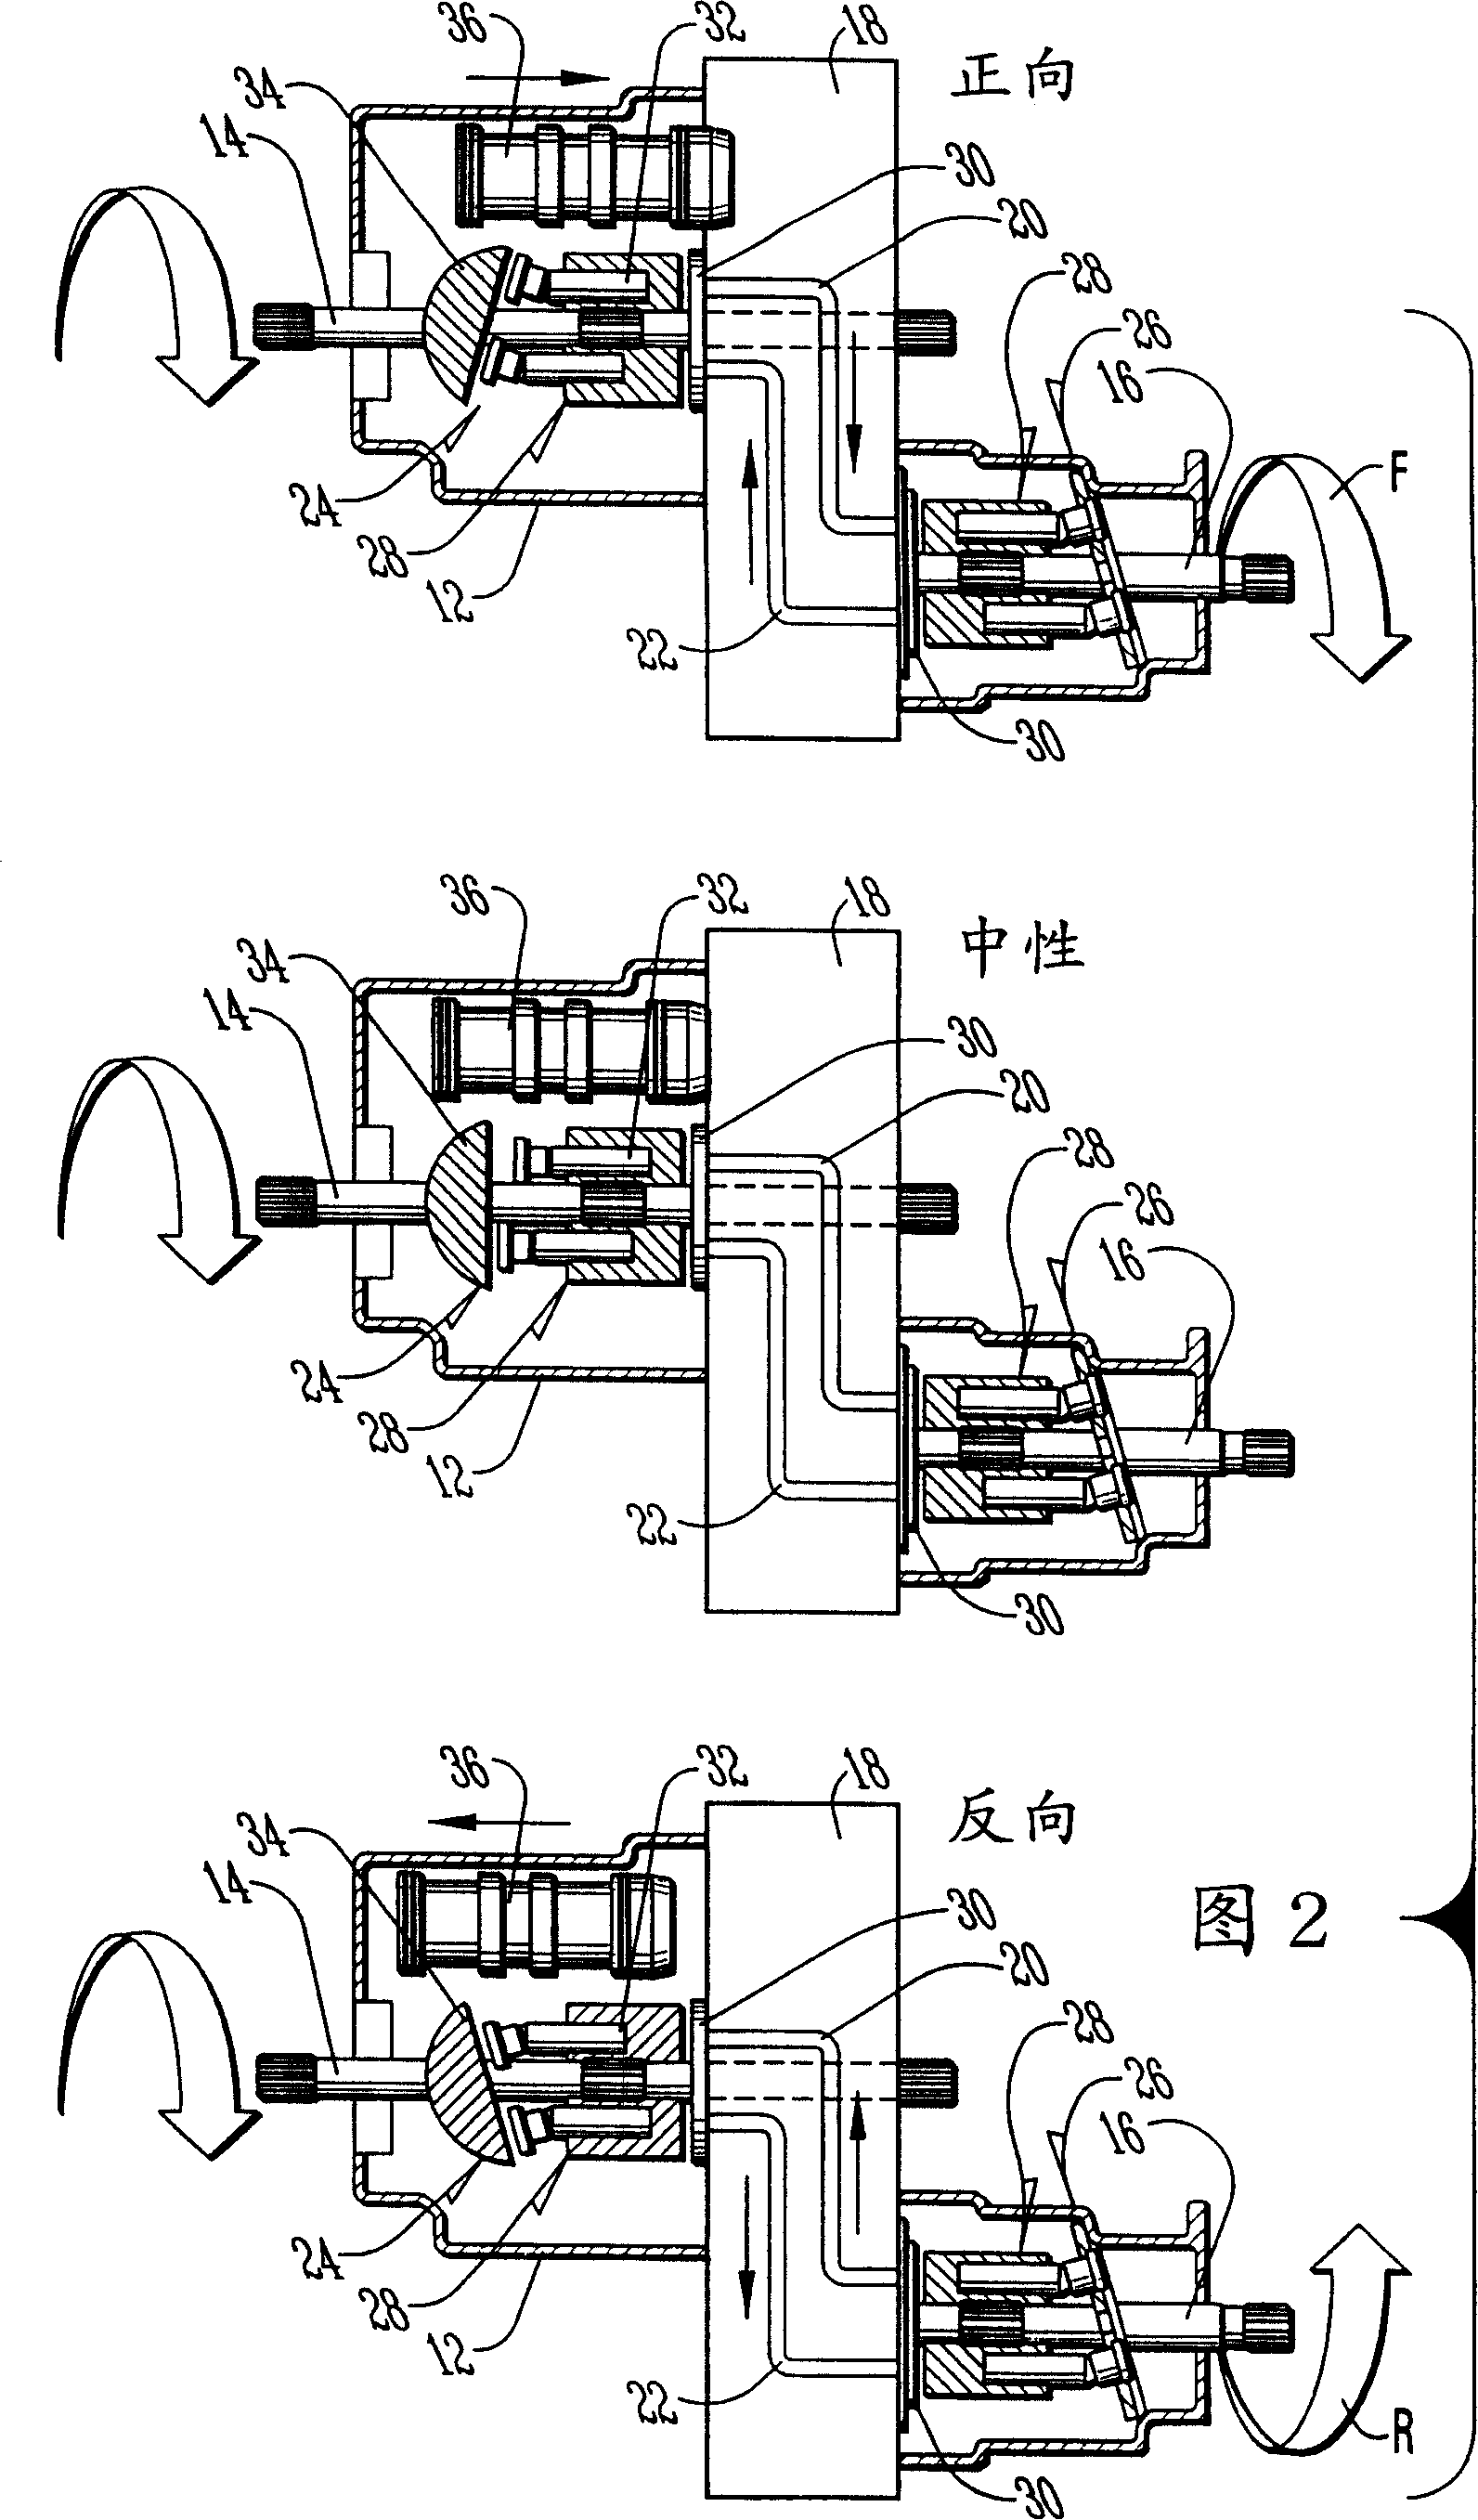 Control system of hydrautic pump